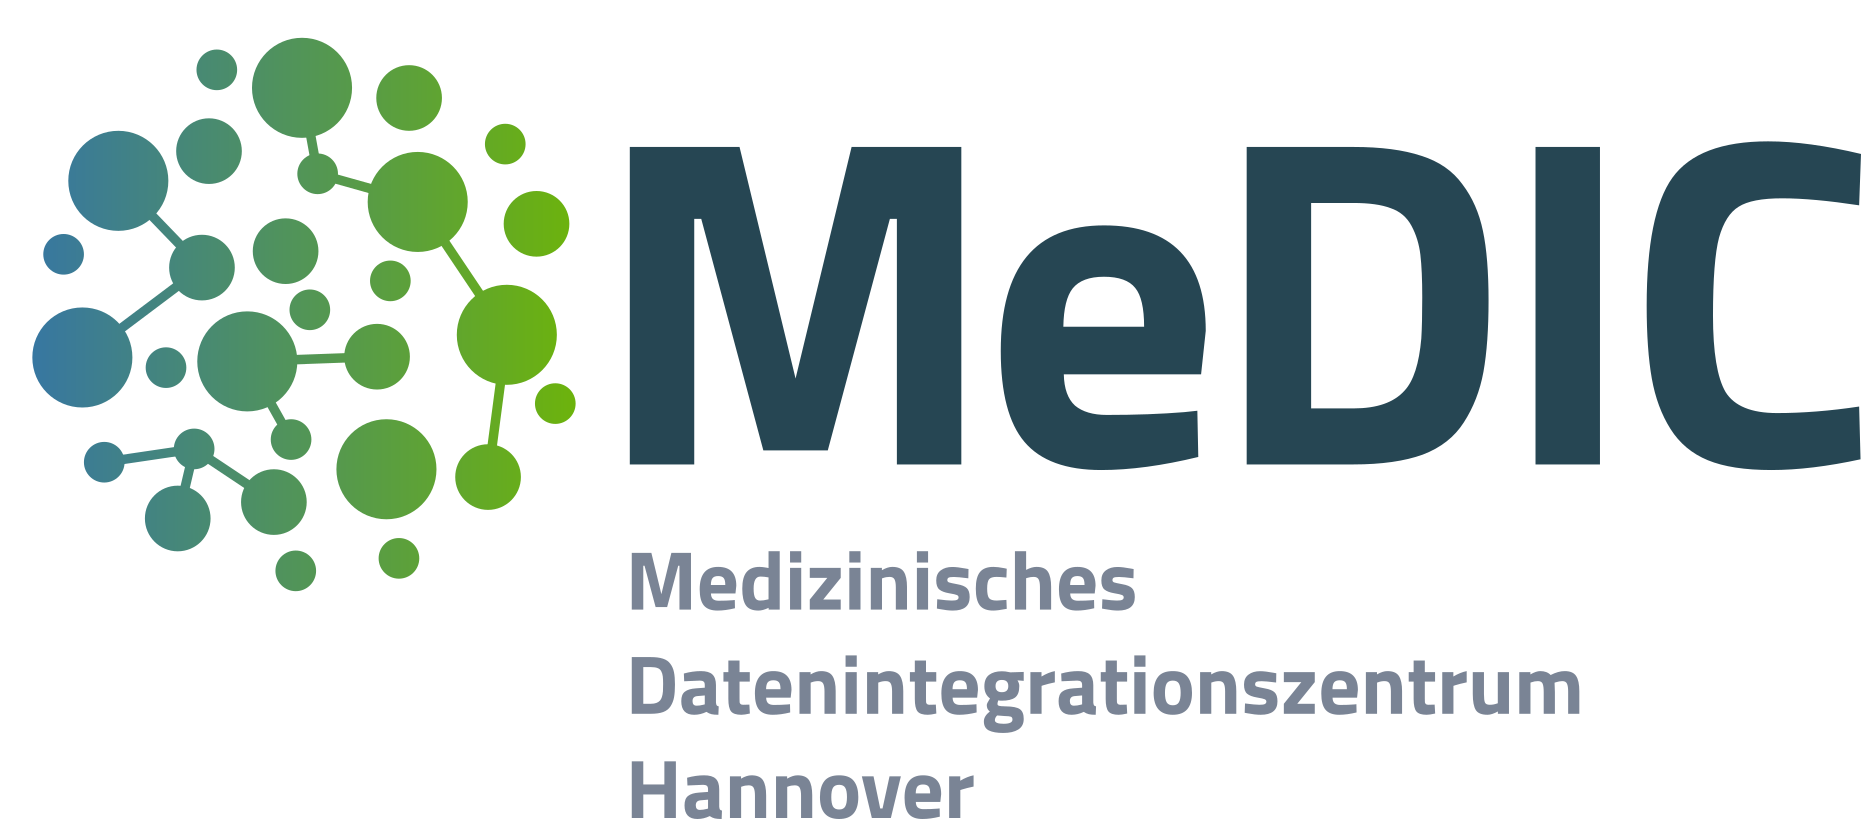 Medical Data Integration Center at Hannover Medical School